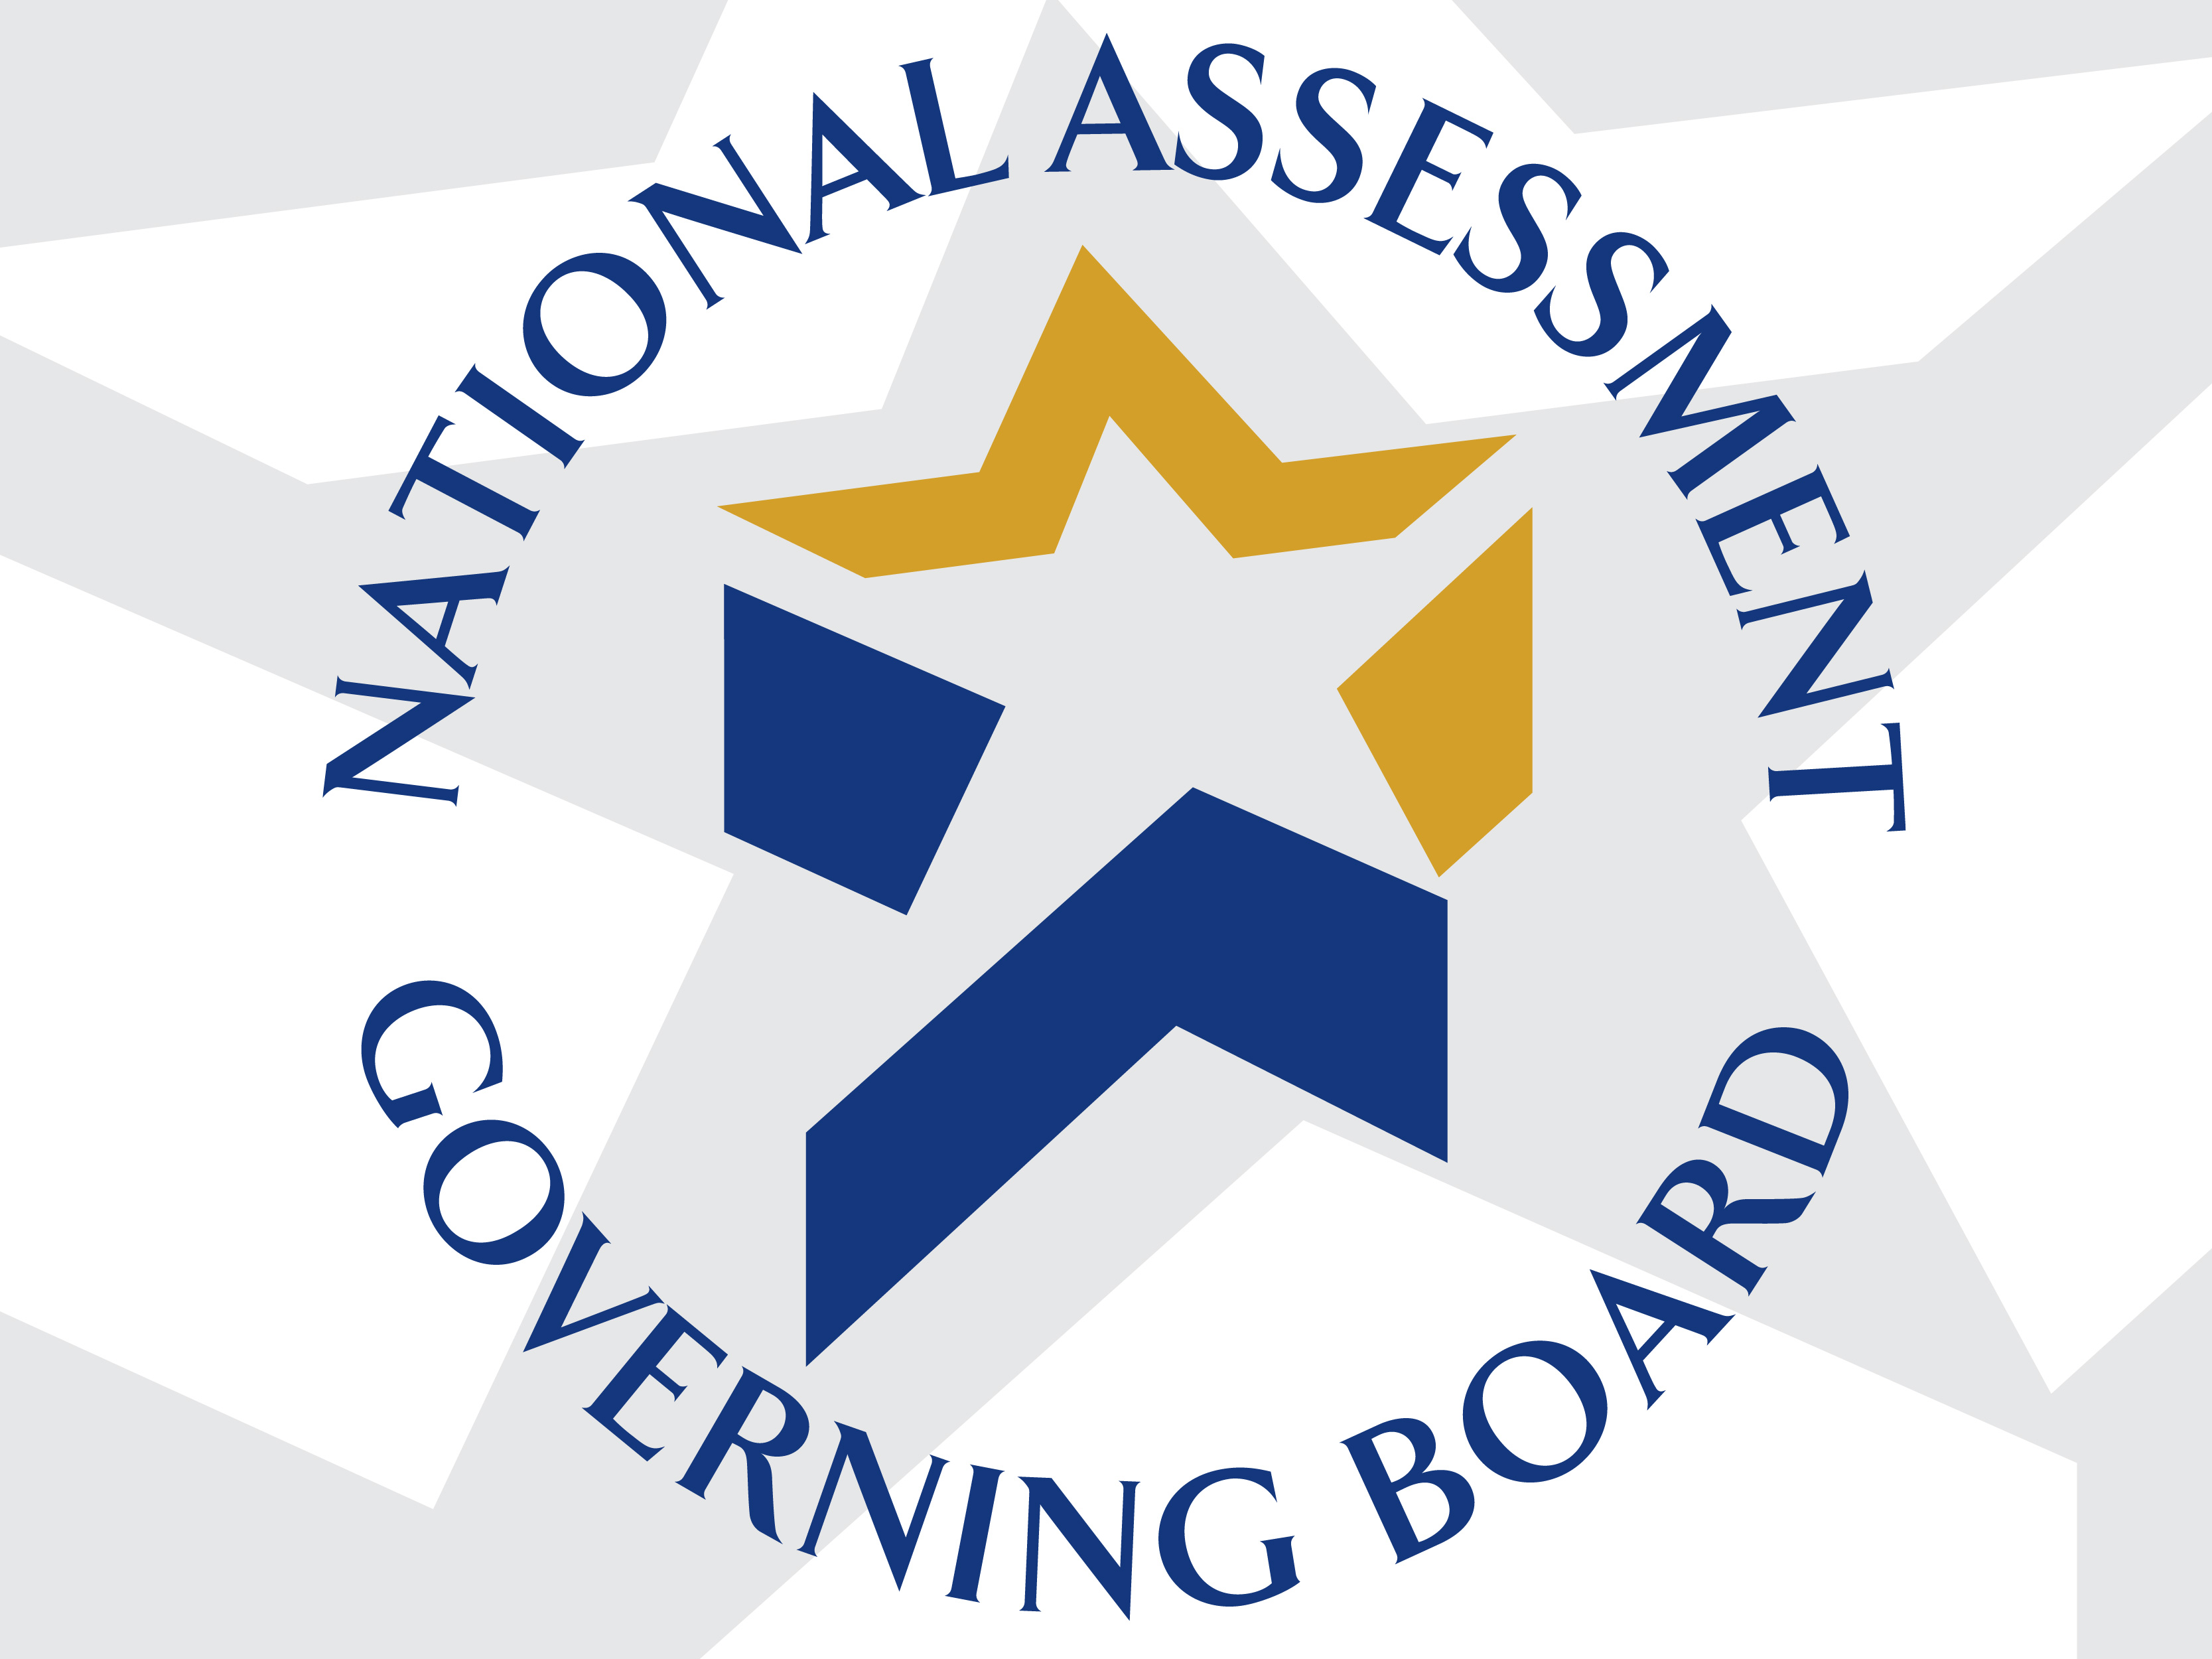 The National Assessment Governing Board – Media Relations